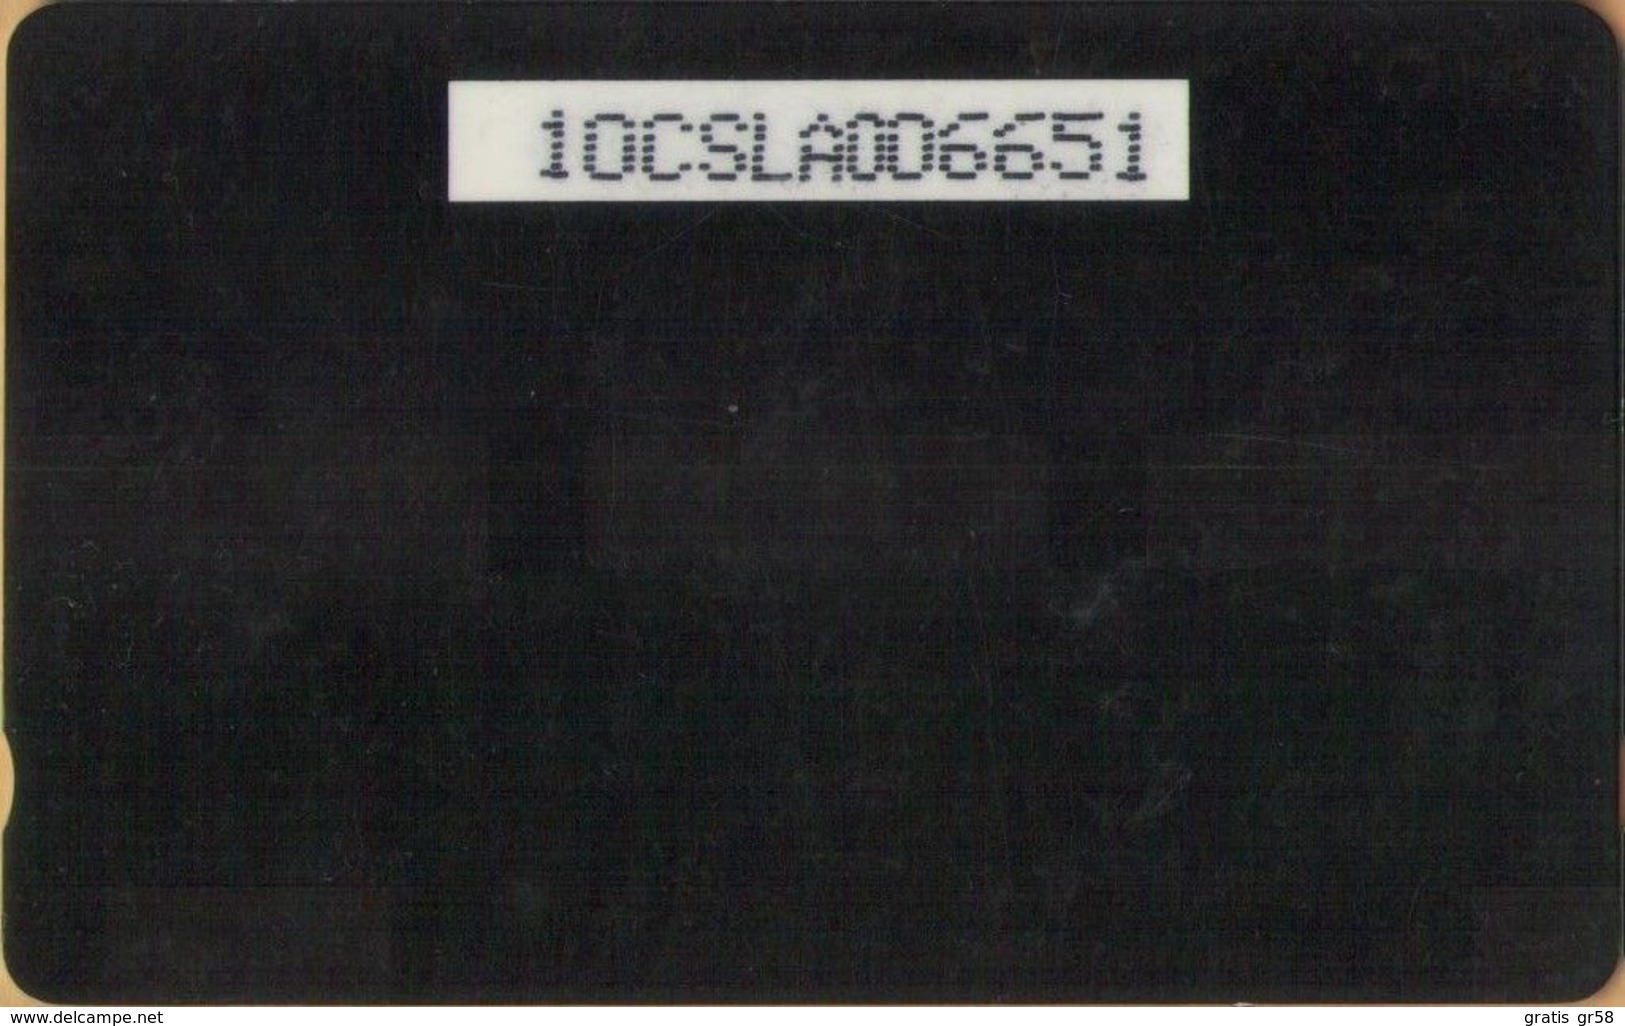 Saint Lucia - GPT, STL-10A, 10CSLA, Piton Beer, 20$, 15.000ex, 1993, Used - St. Lucia